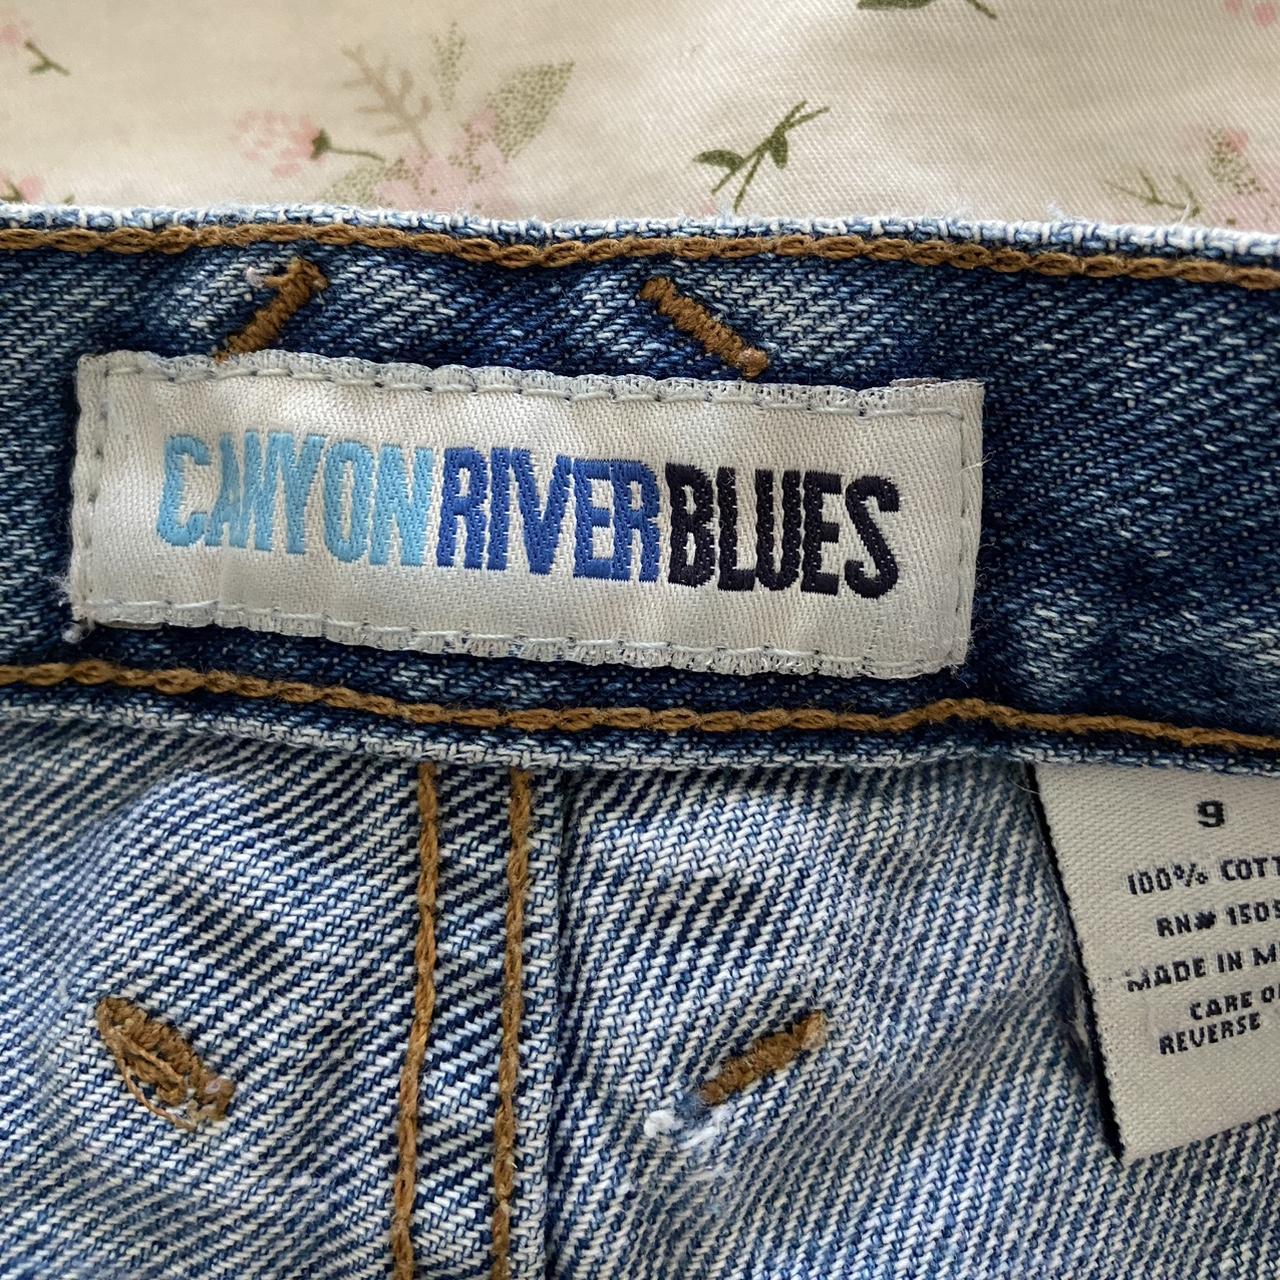 Canyon River Blues Women's Shorts (5)